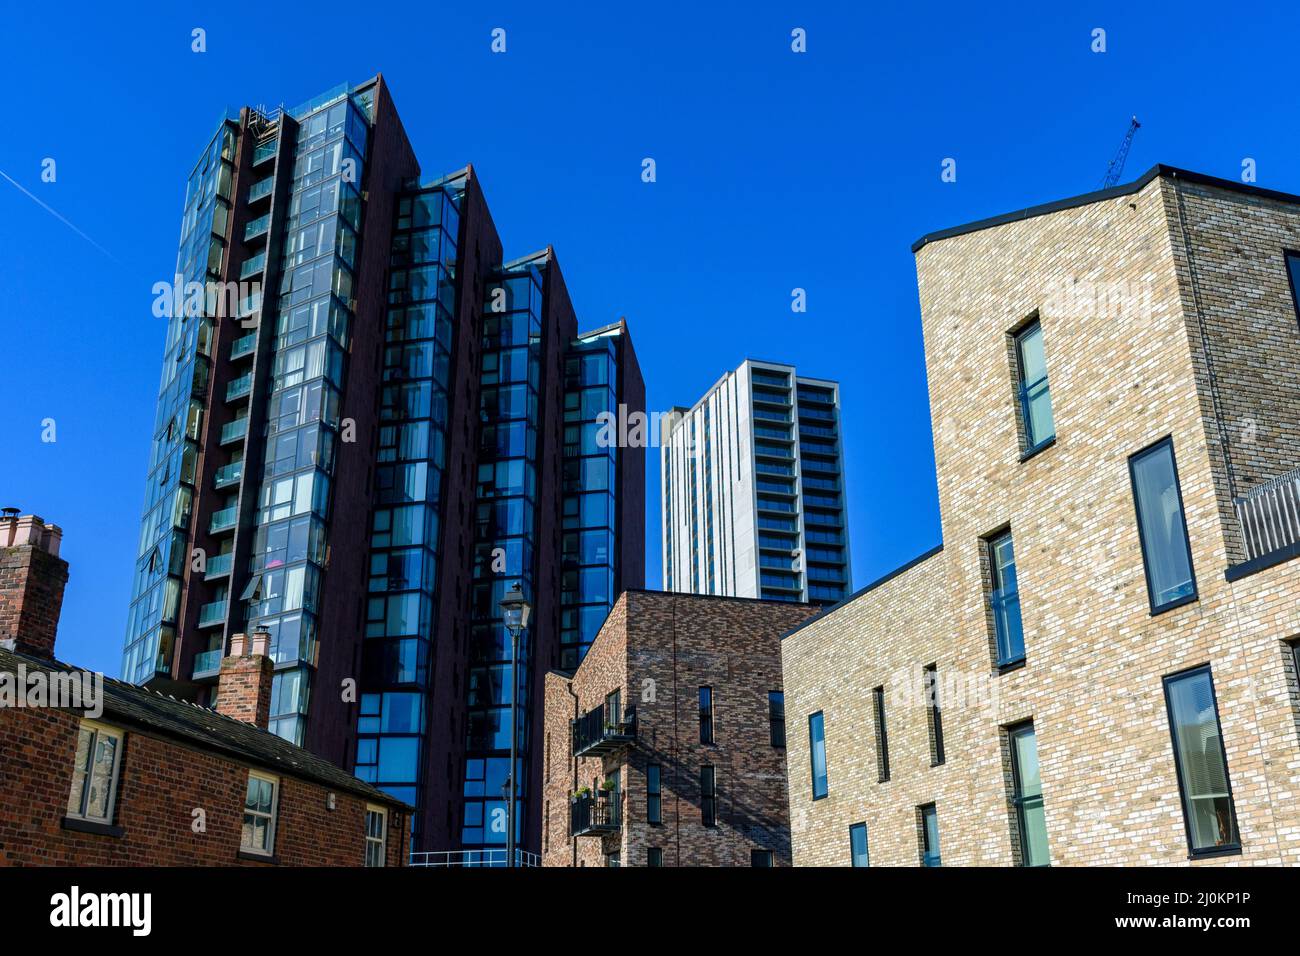 Los bloques de apartamentos de Islington Wharf, Islington Wharf Mews y Oxygen Tower, New Islington, Ancoats, Manchester, Inglaterra, REINO UNIDO Foto de stock